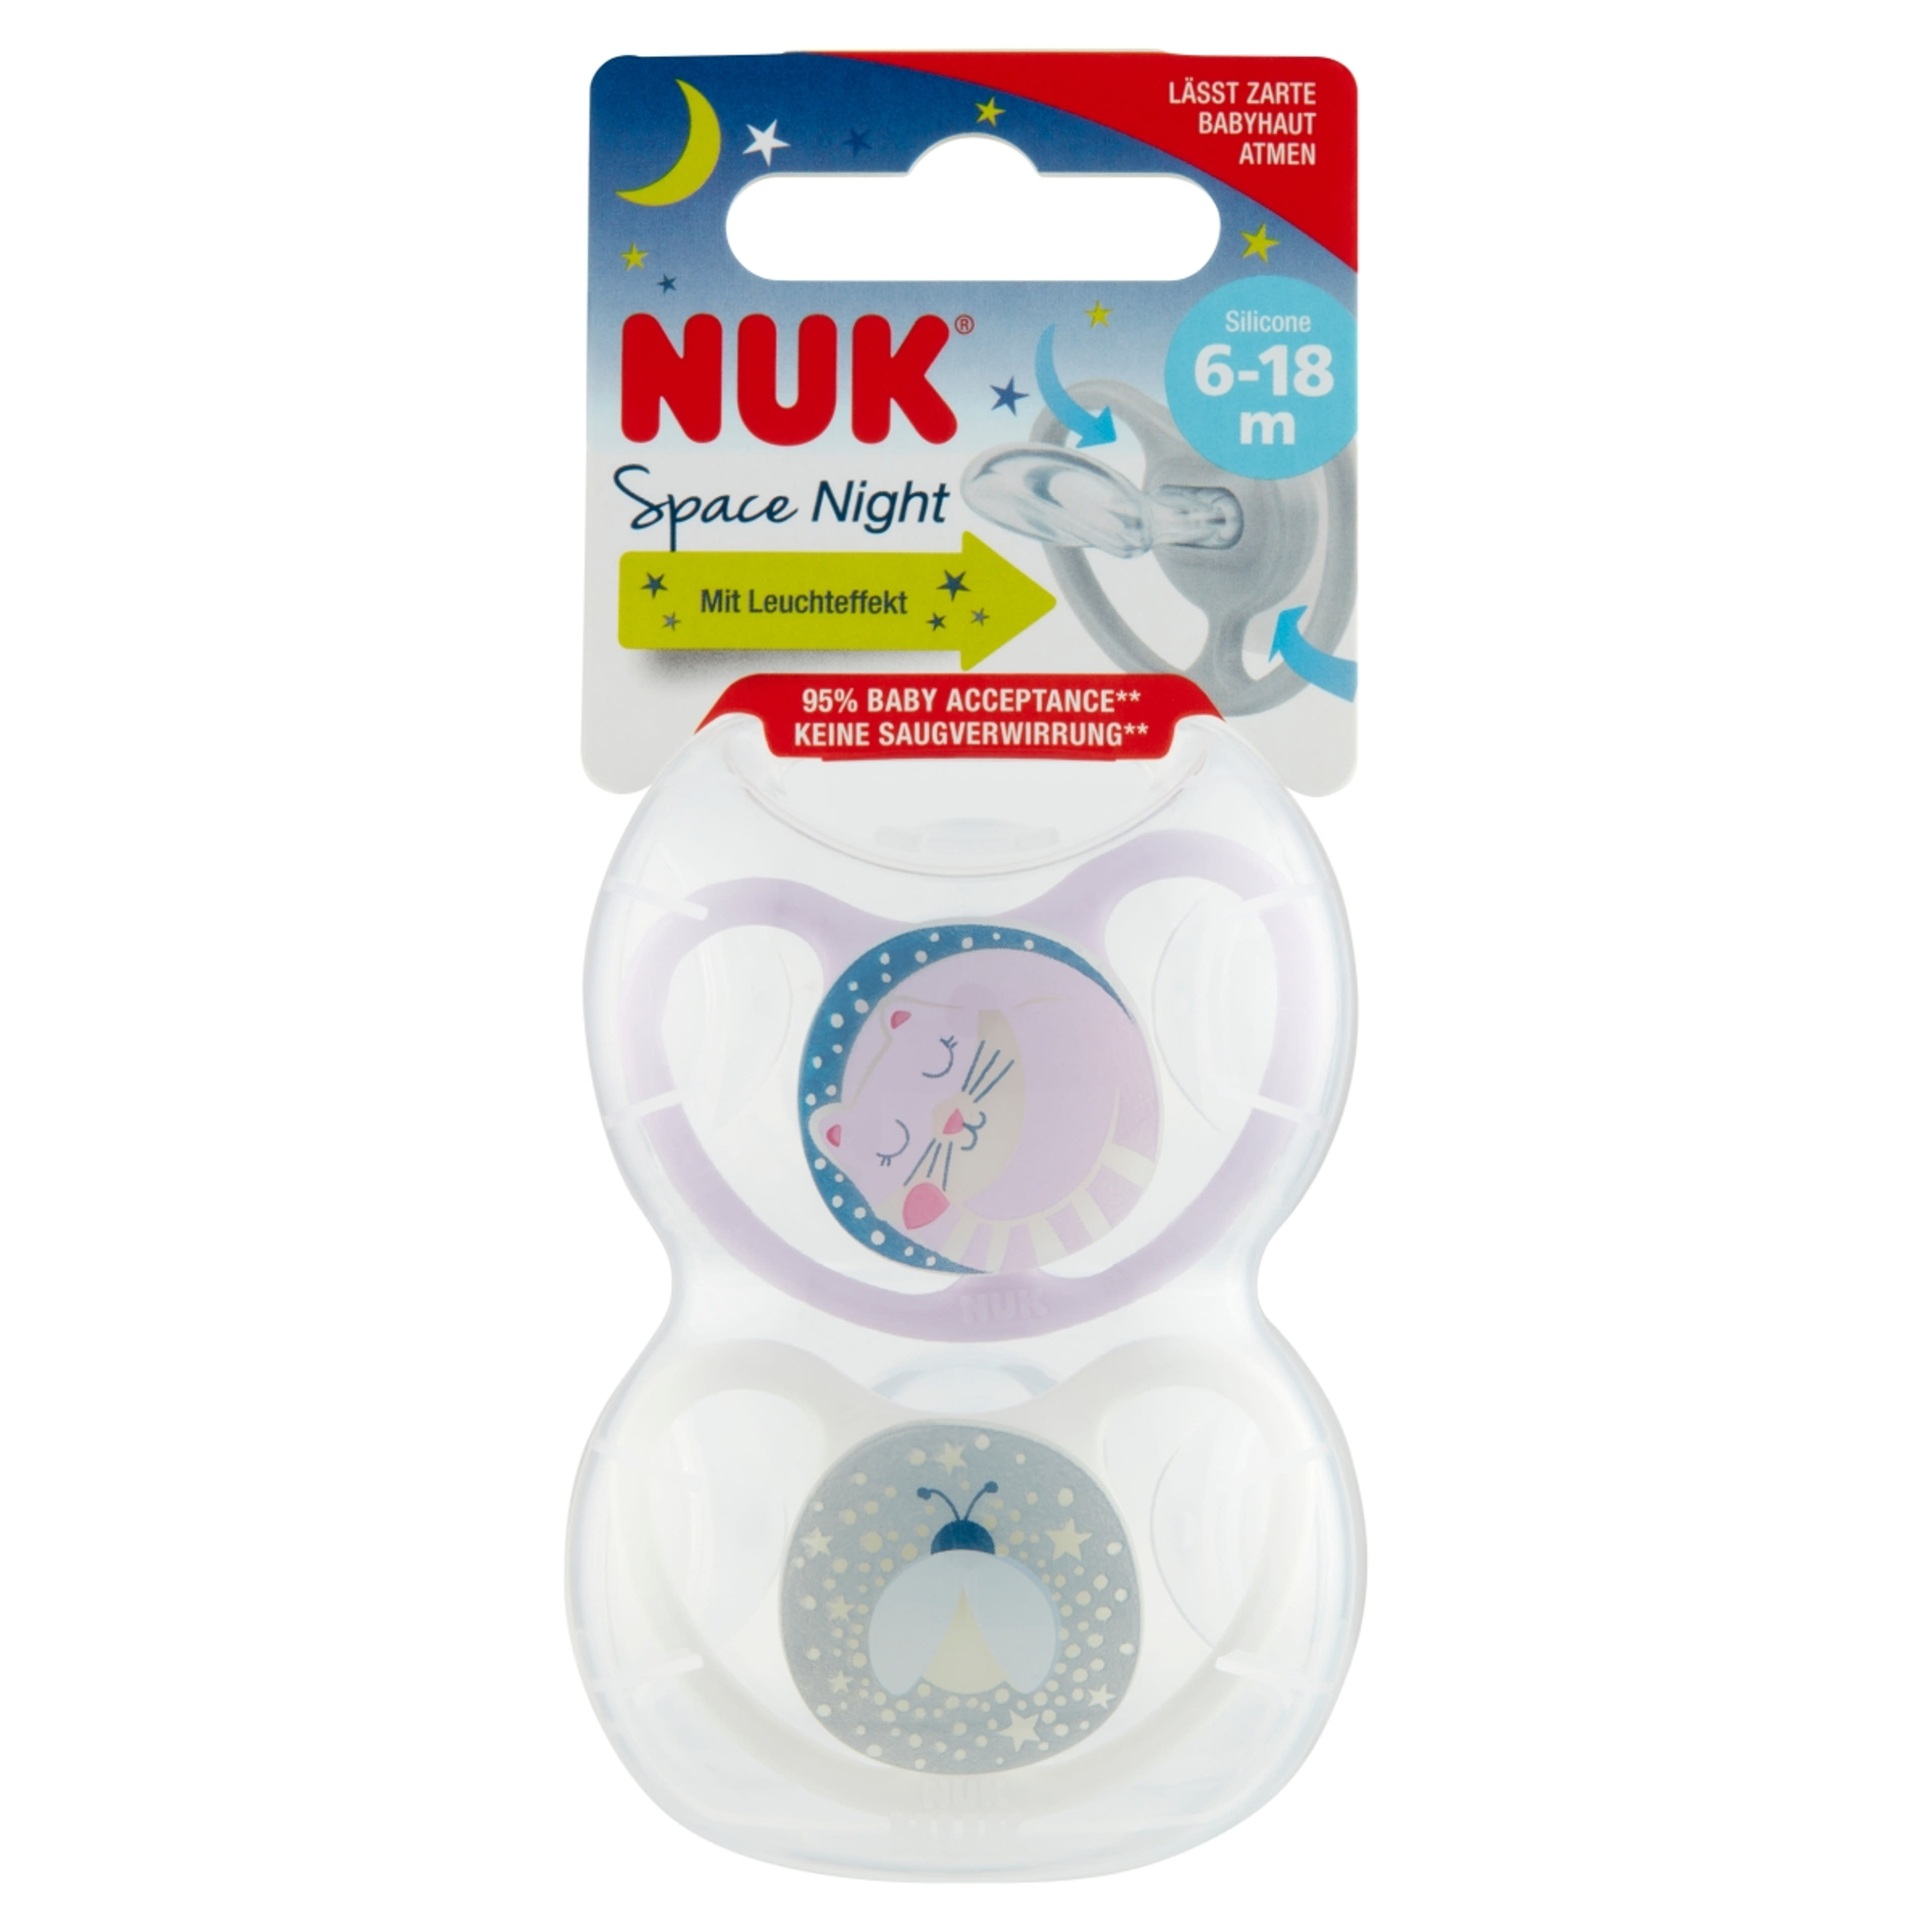 Nuk Space Night szilikon altatócumi, 6-18 hónapos korig, lány - 2 db-1